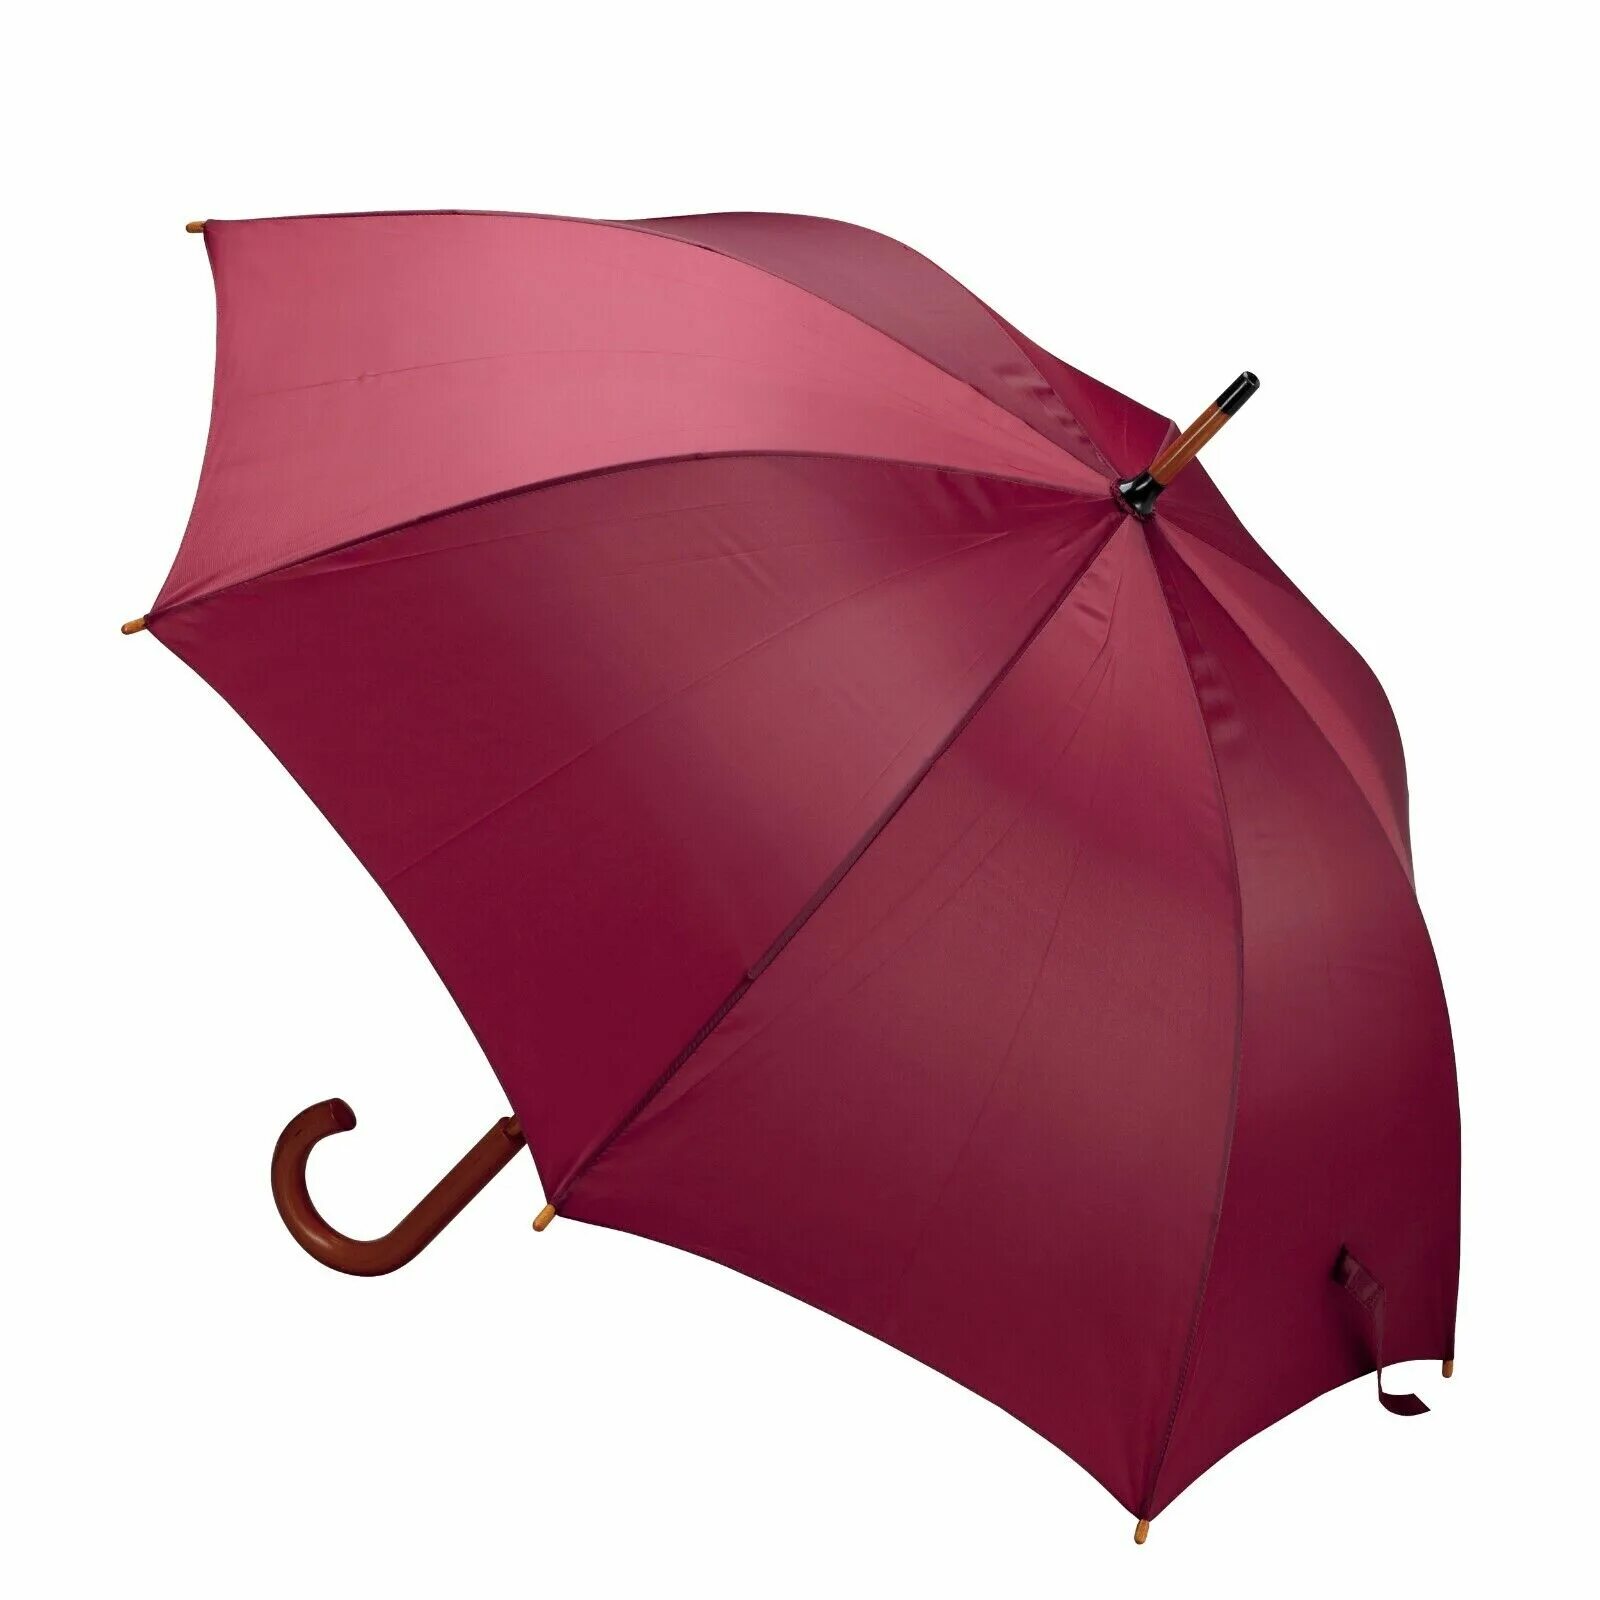 "Style Umbrella" зонт женский. Фирма Esprit зонт трость. "Style Umbrella" зонт женский автомат. Зонт трость бордовый. I need umbrella